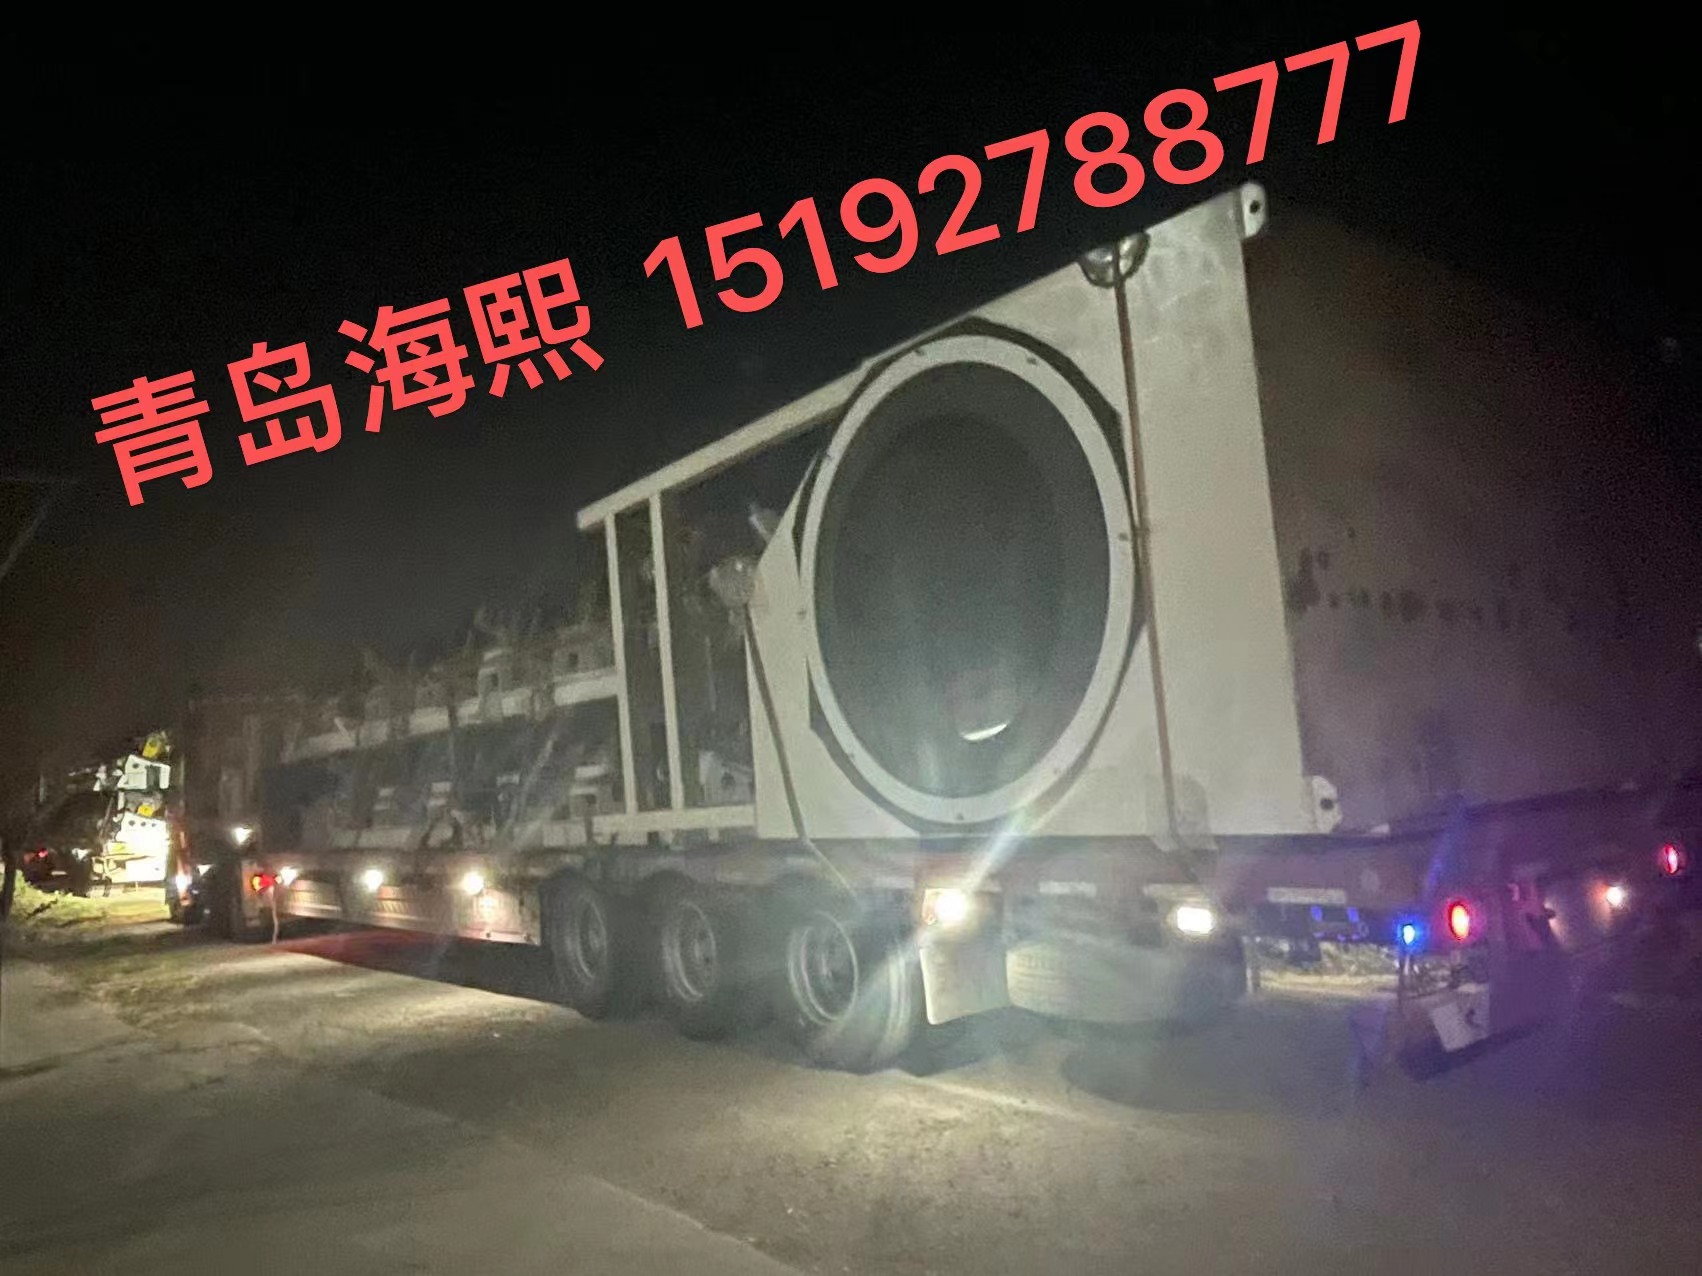 Hebei Avionics Pipeline Group Co., LTD. - the second car